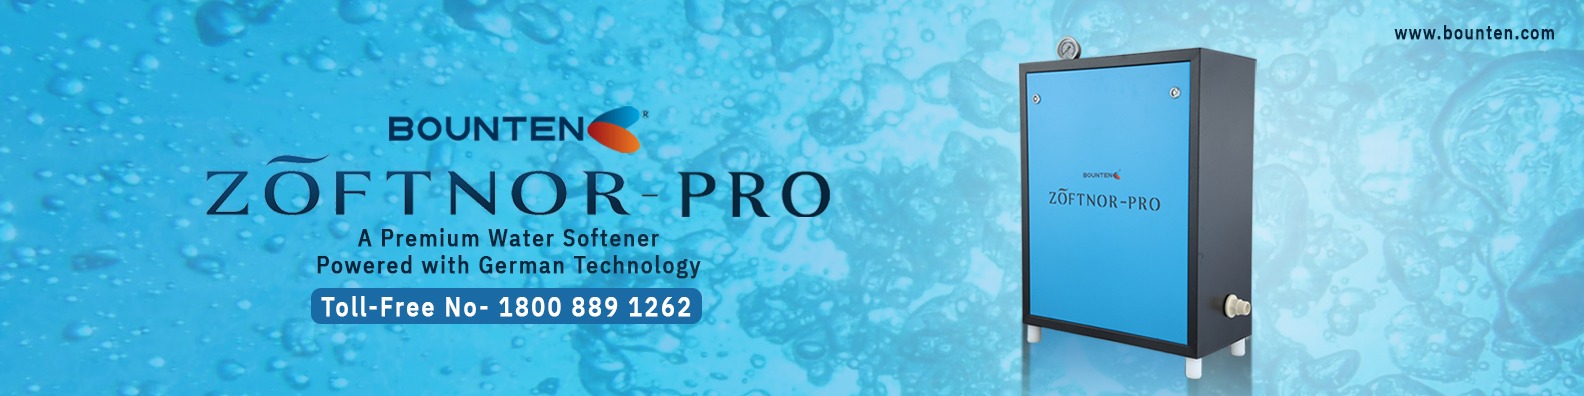 Water Softener for Residential | Commercial | Industrial in Hyderabad | Bounten Zoftnor Pro